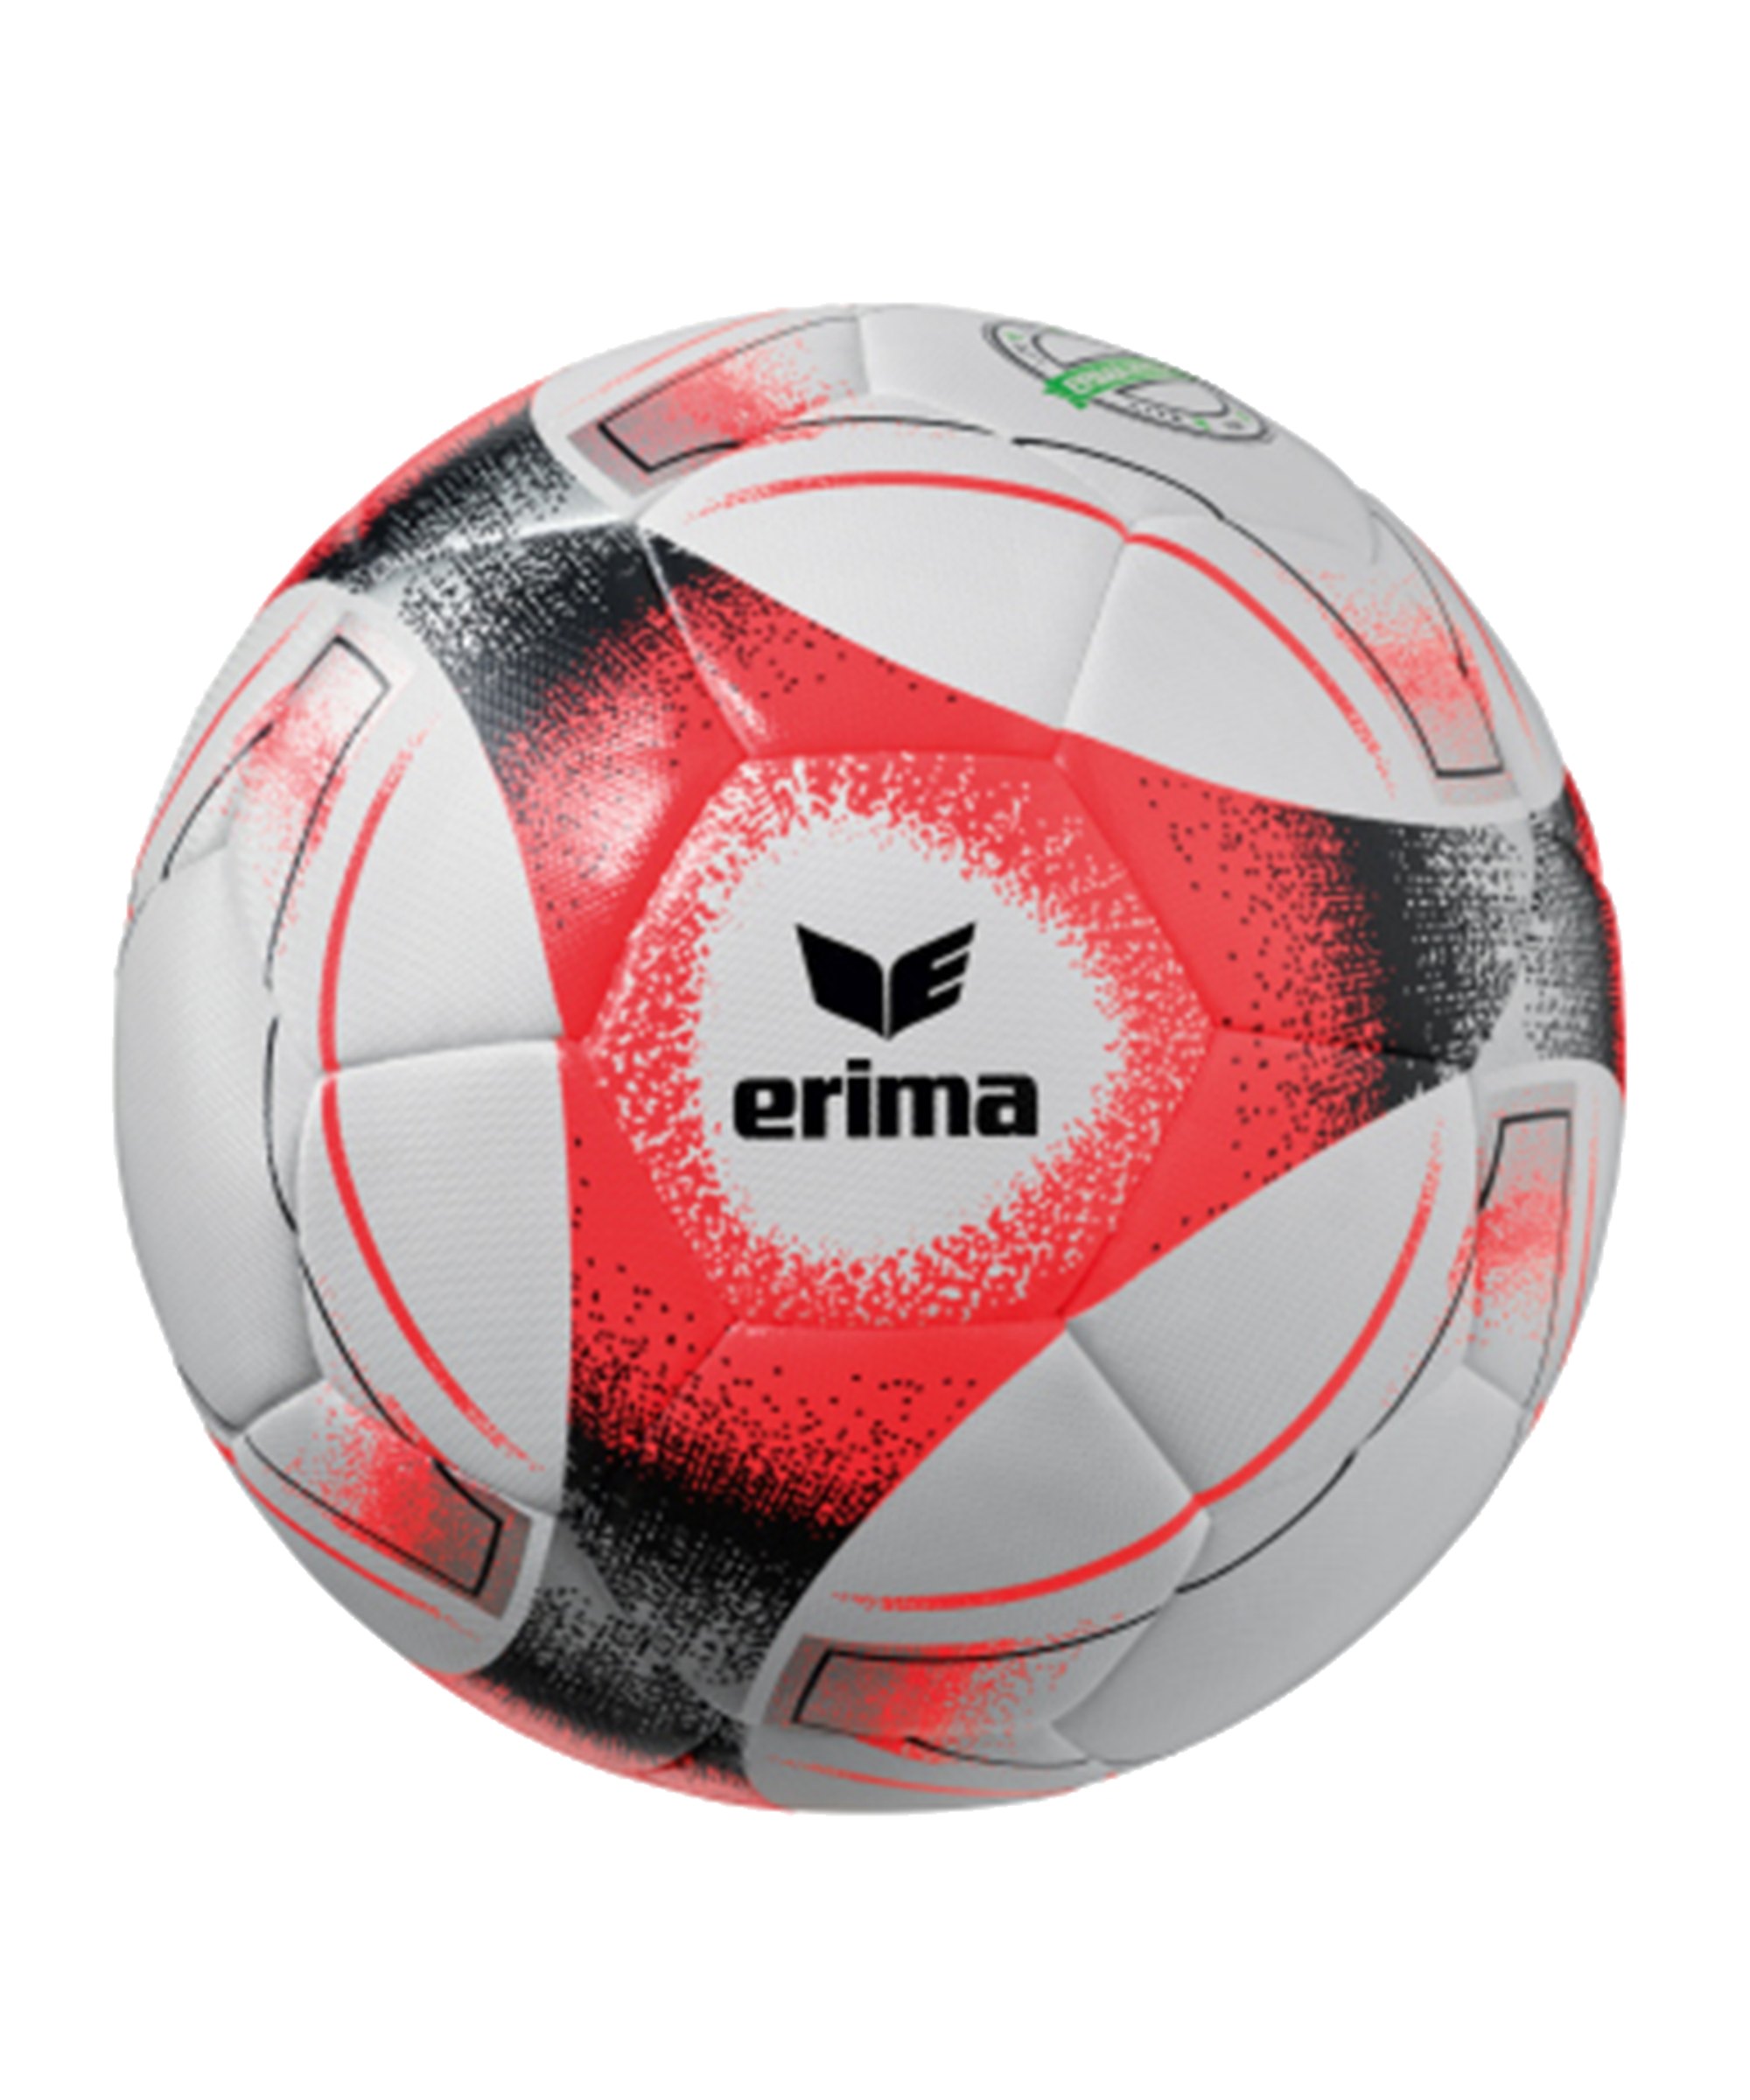 Erima Hybrid Lite 350 Trainingsball Orange - orange